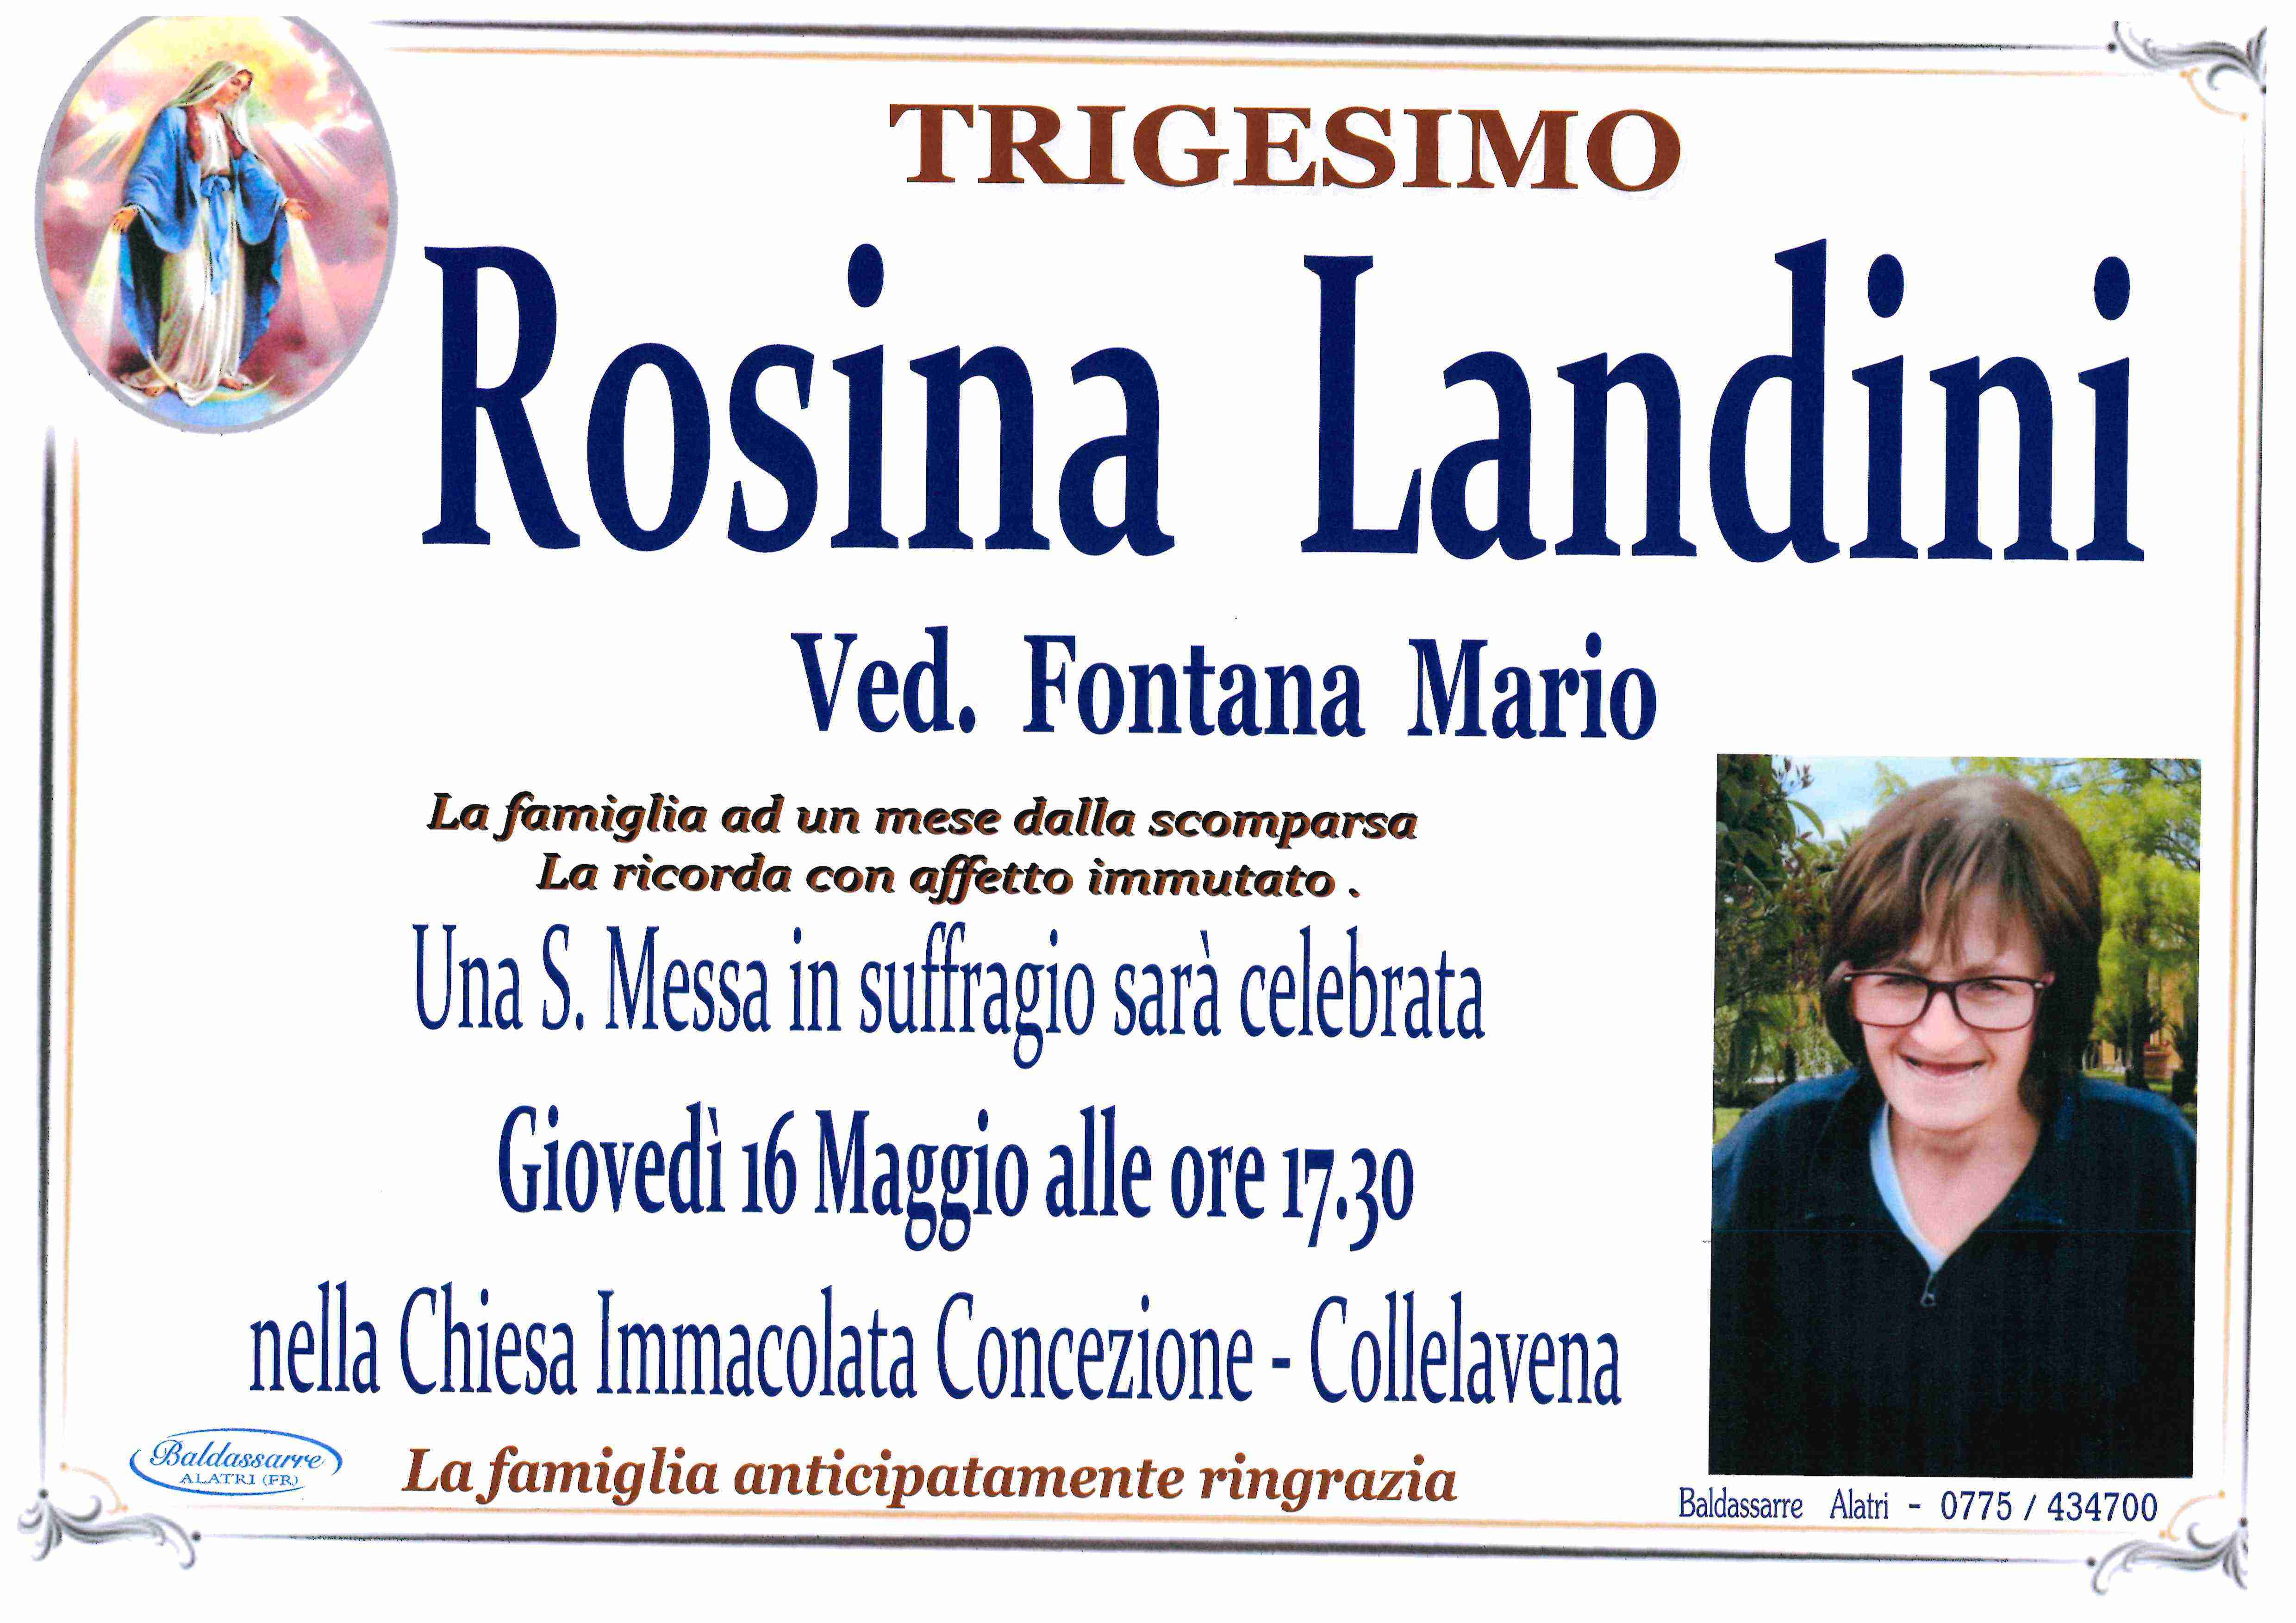 Rosina Landini